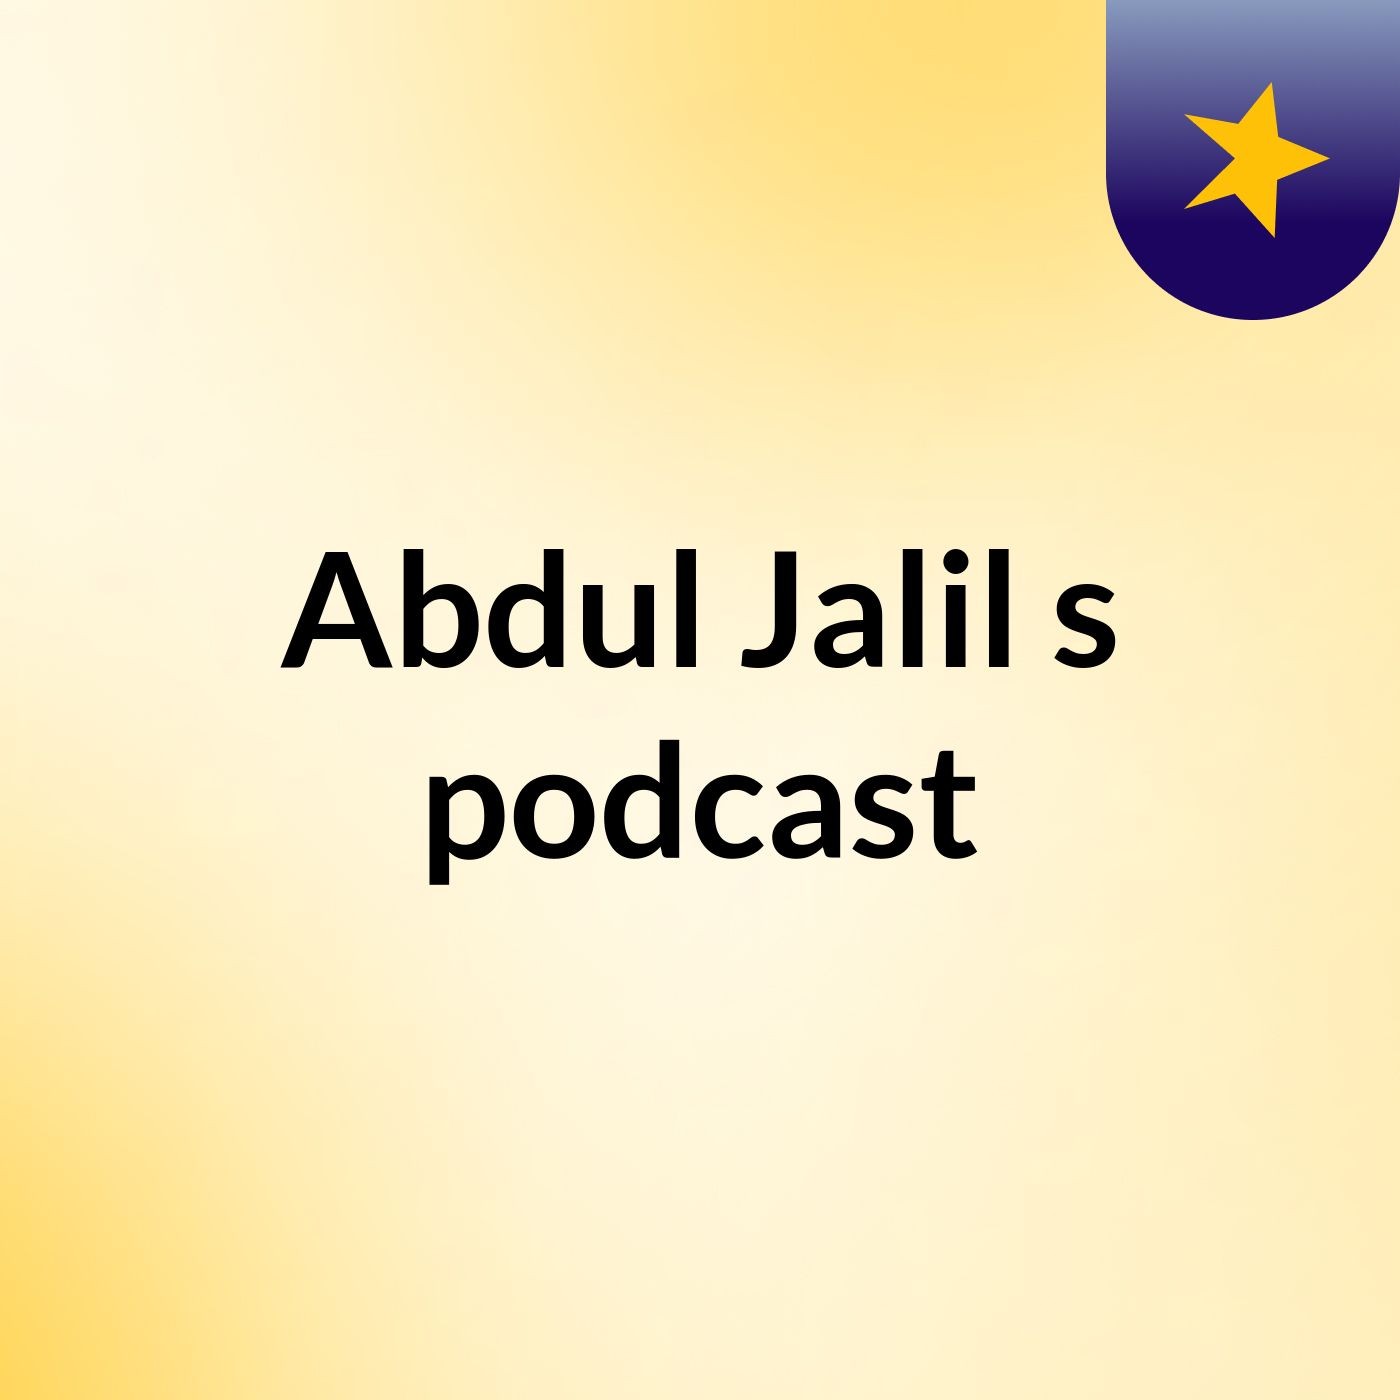 Abdul Jalil's podcast